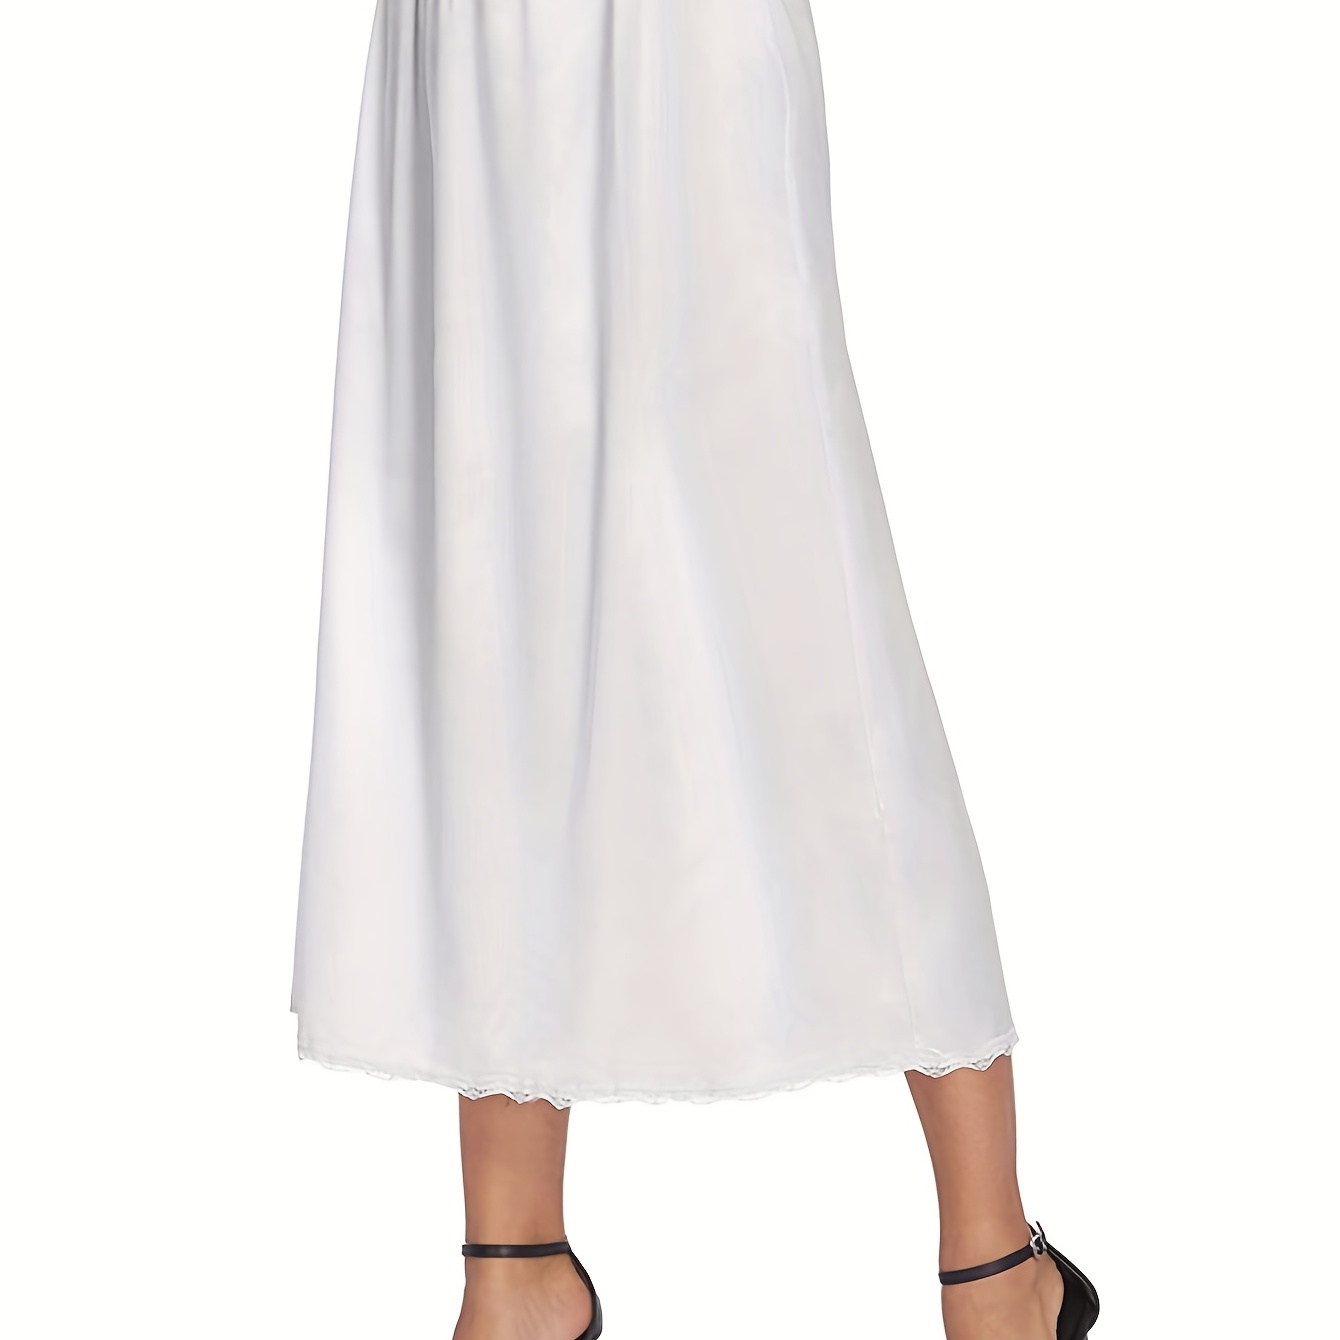 

Foral Lace Trim Solid Skirt, Elegant Mid Rise Half Slips Petticoat, Women's Underwear & Shapewear